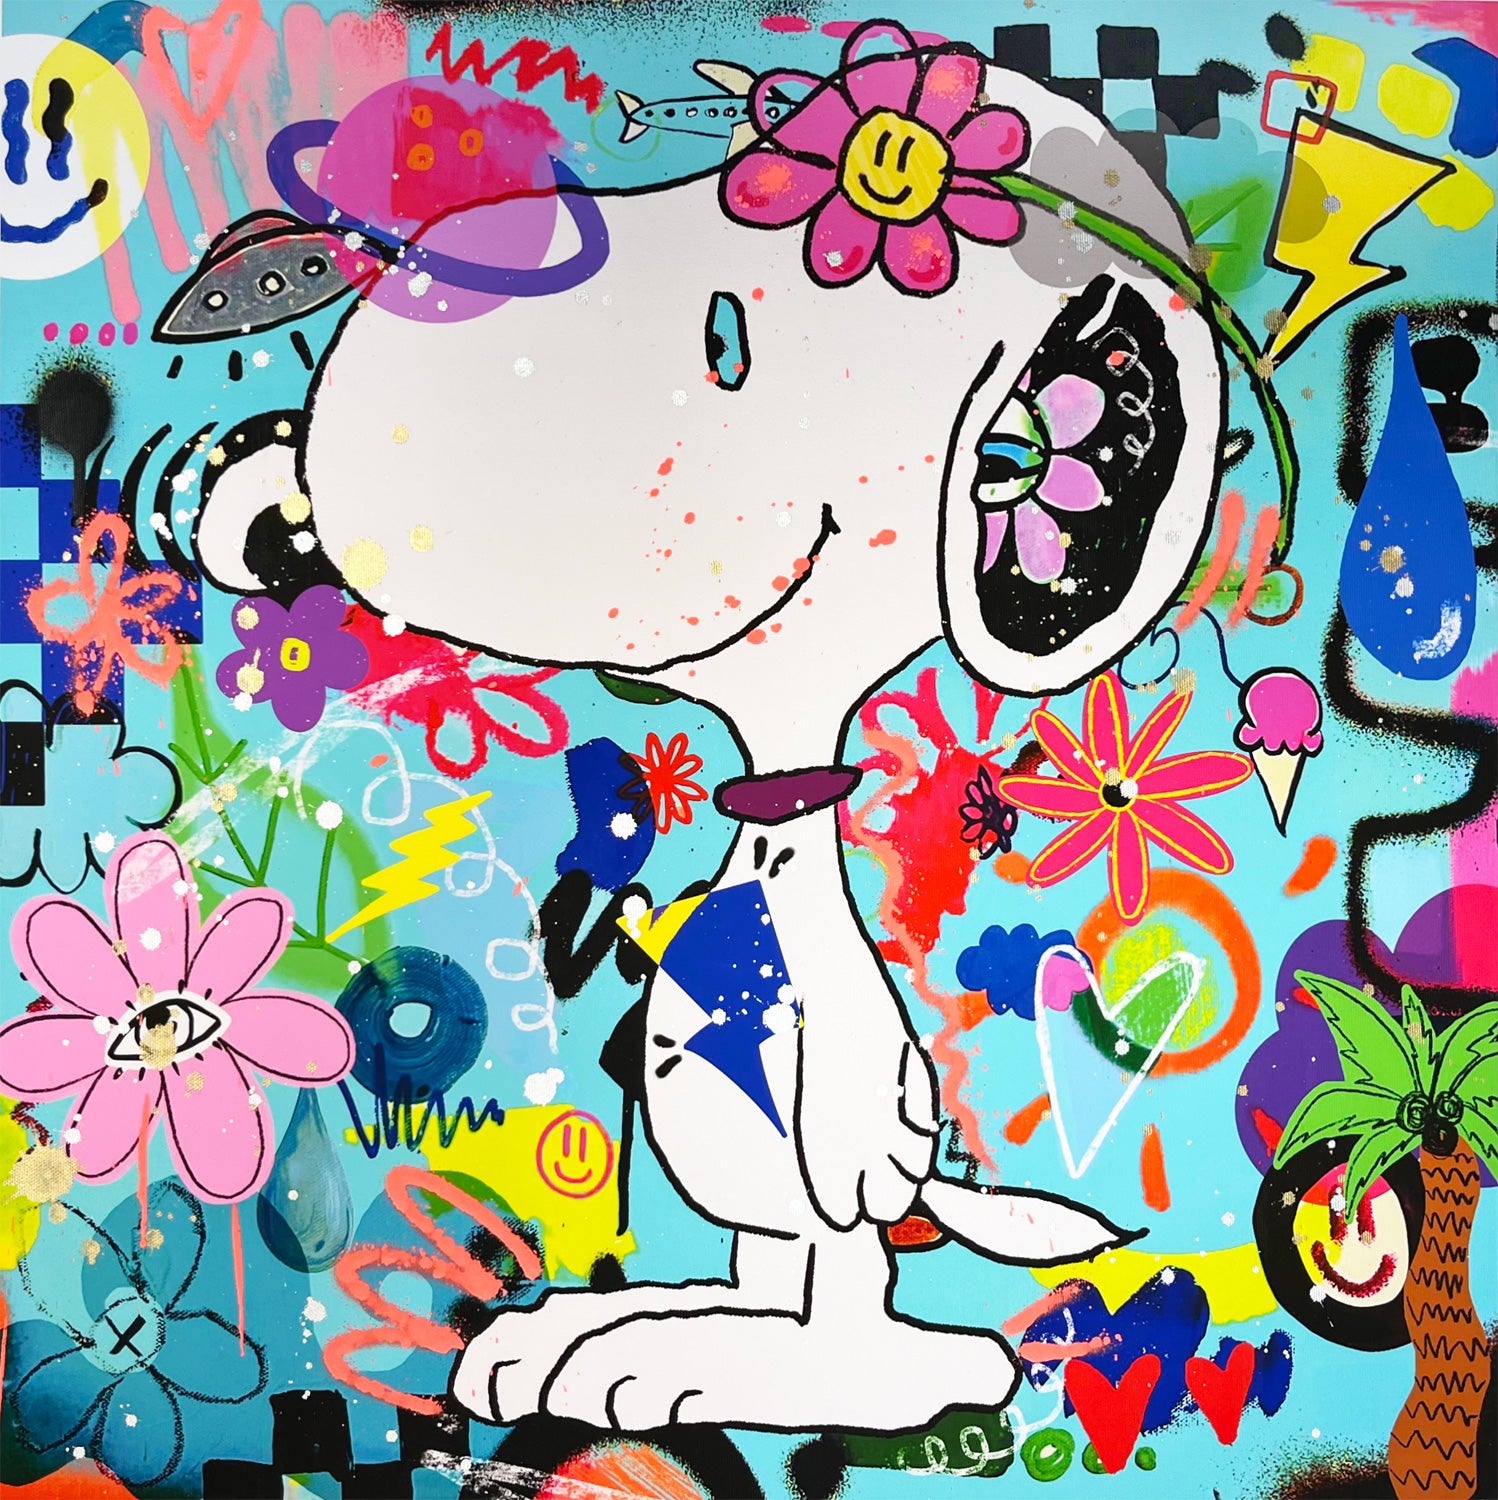 Chris Solcz - Snoopy Ed. 3/5, 24" x 24"